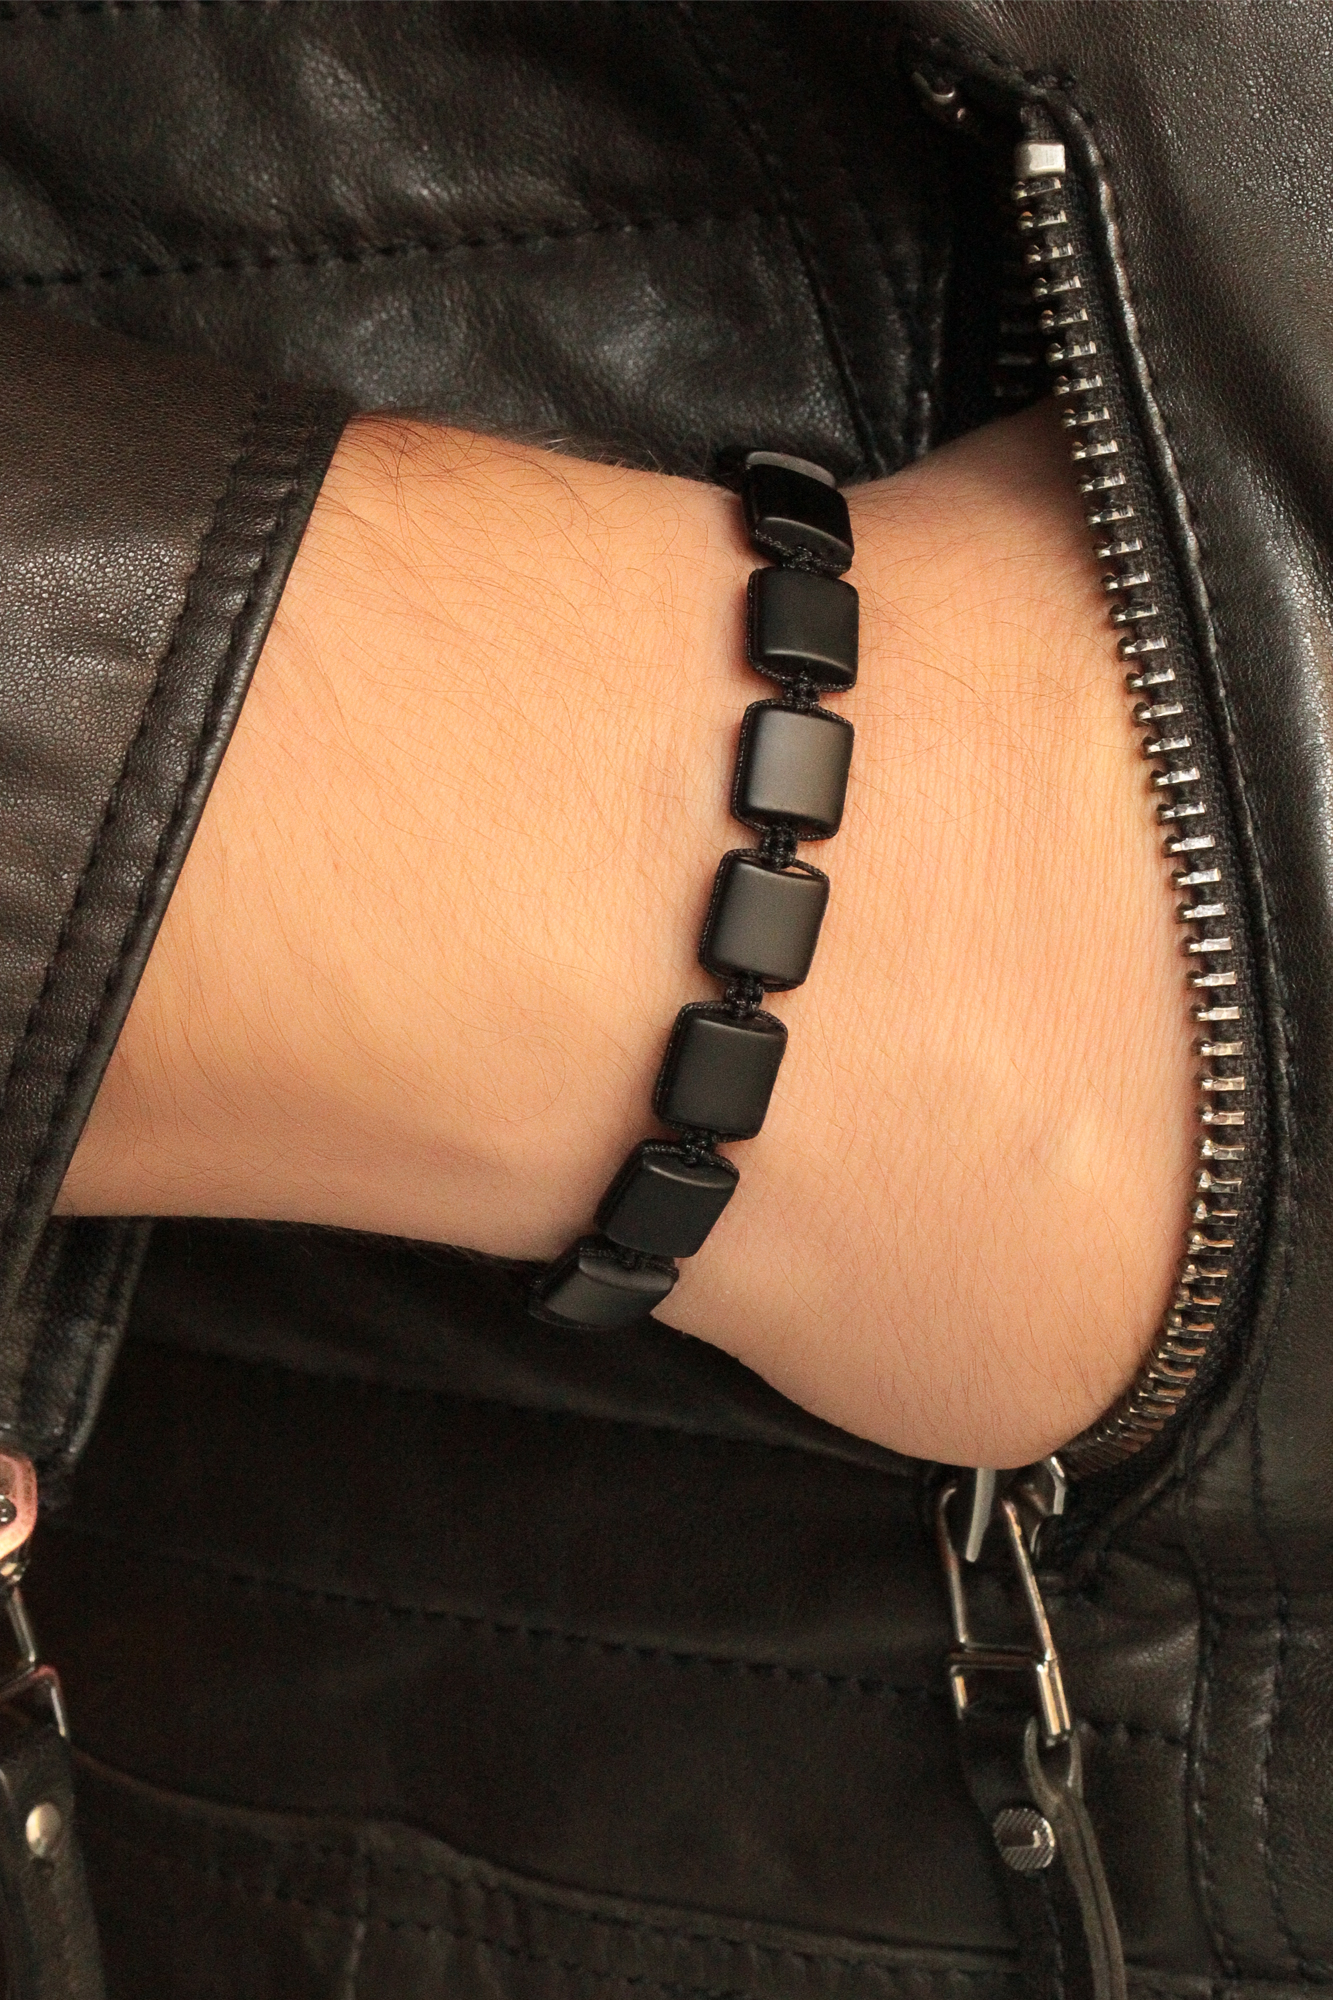 Men's Bracelet